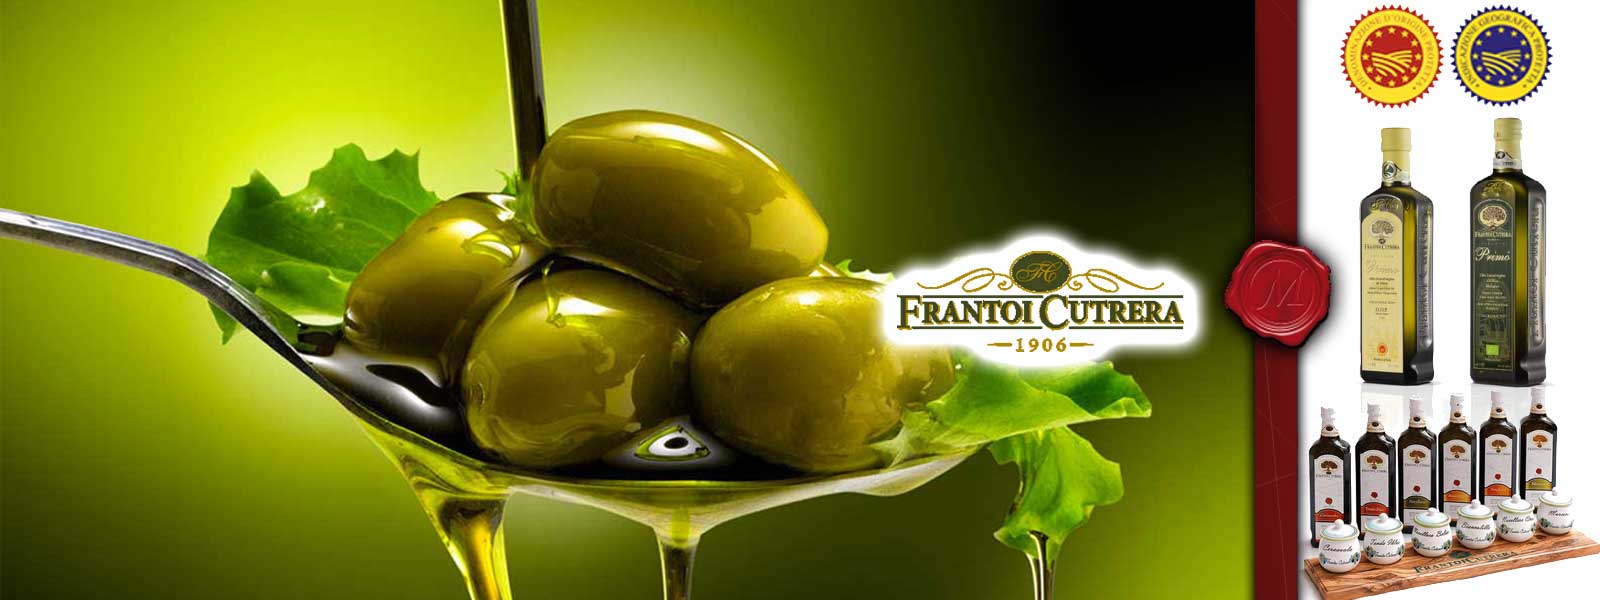 Aceite de oliva de Frantoi Cutrera 